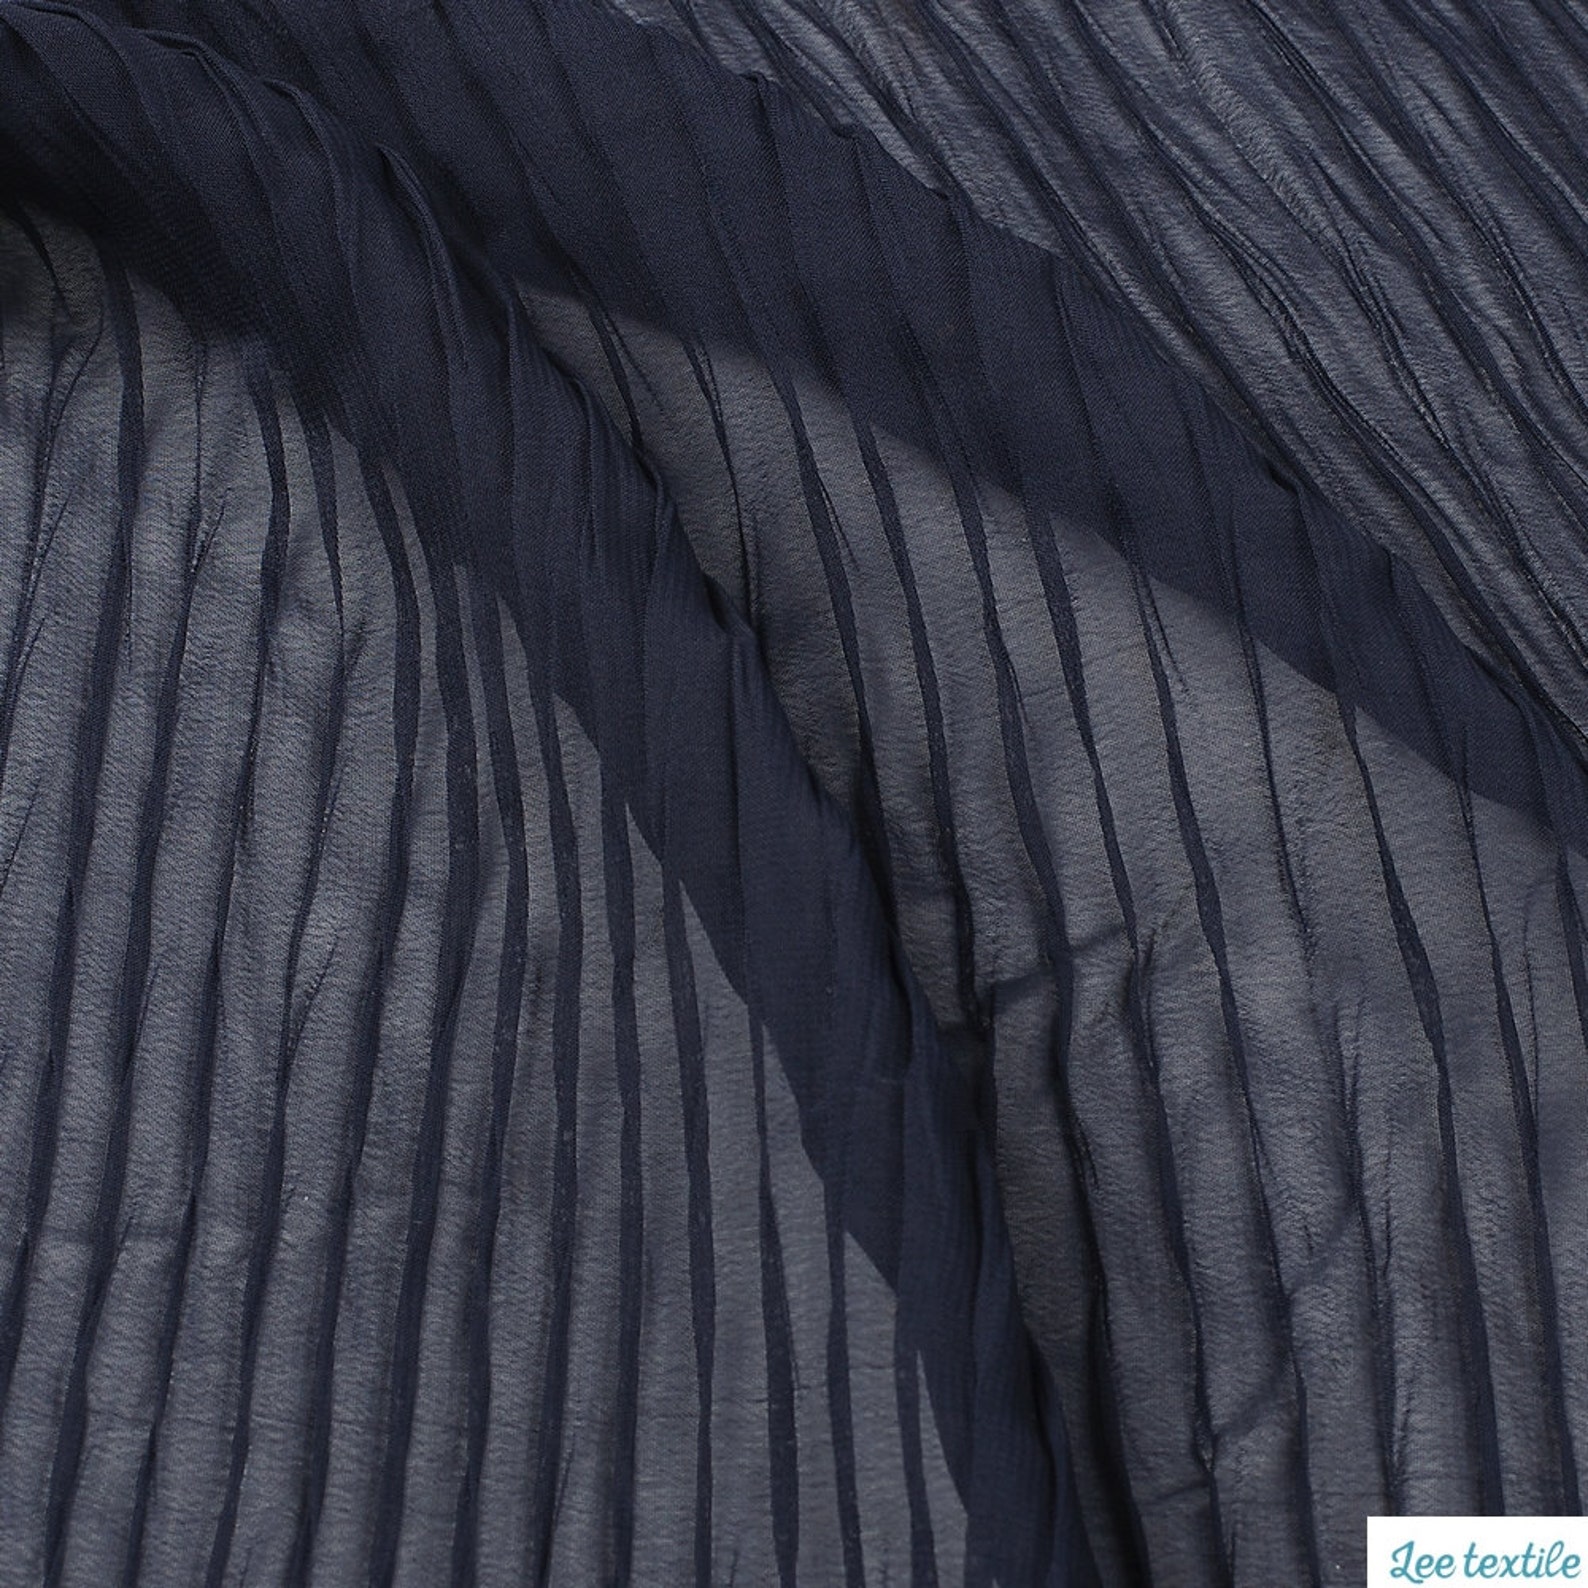 Black Pleated Chiffon Fabric by the Yard 3D Ruffled Dress Women Summer ...